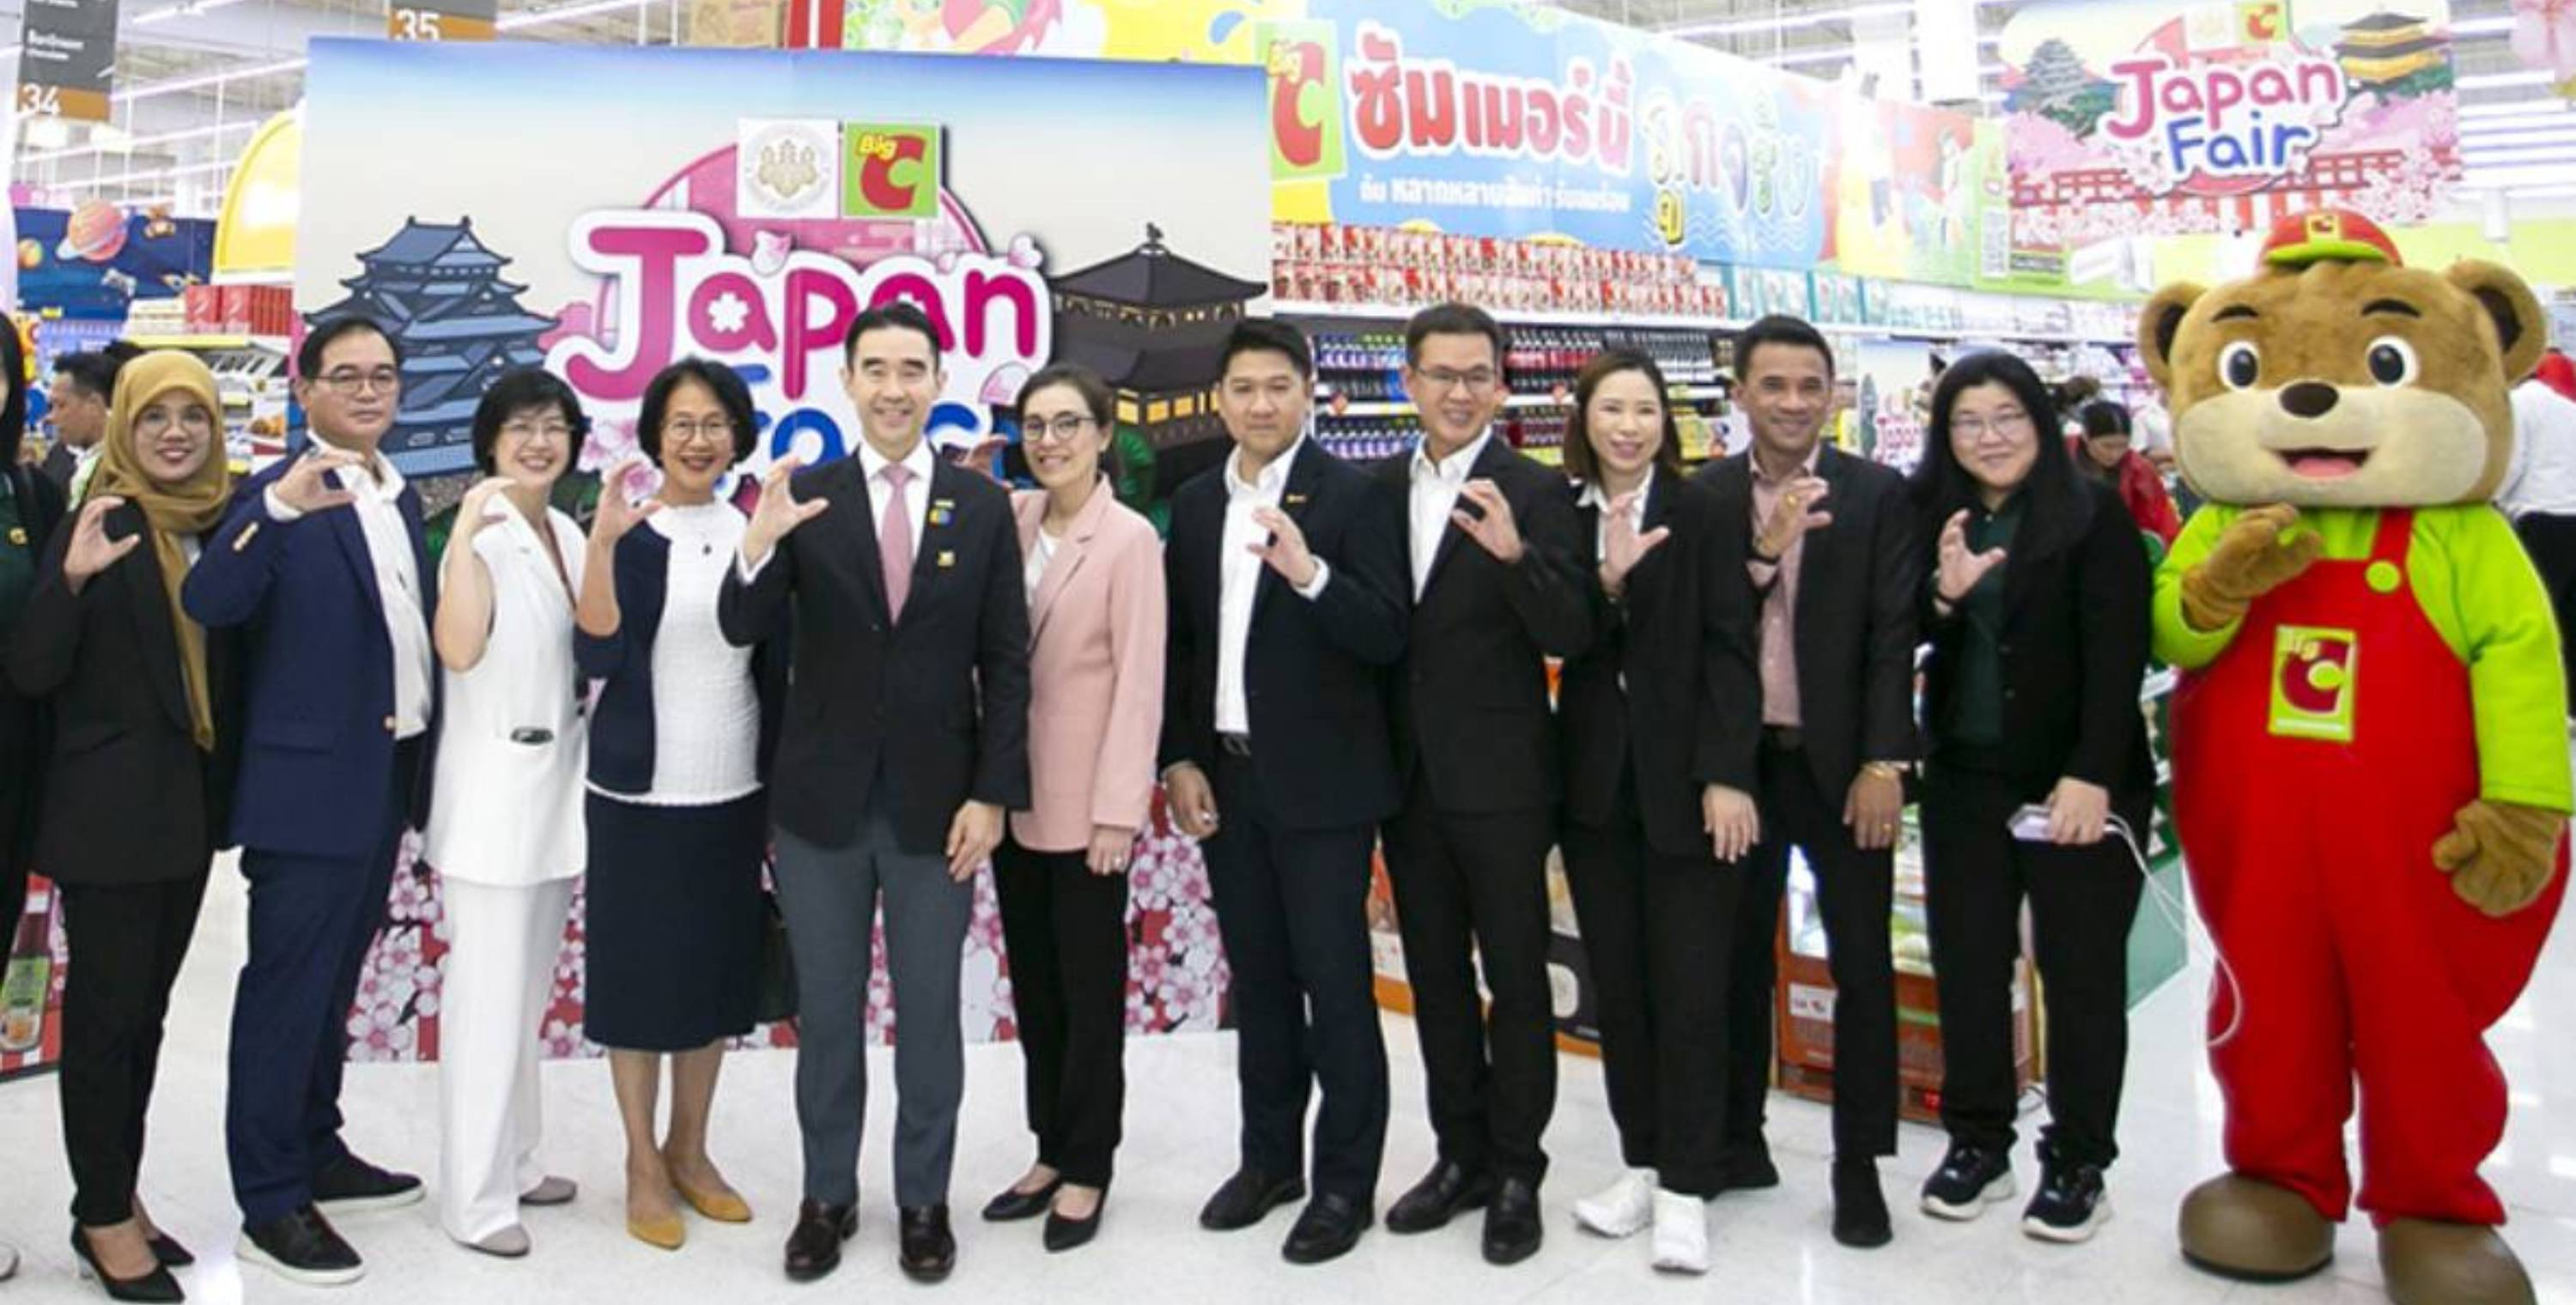 BJC Big C in collaboration with Japan Embassy,  Bangkok organized Japan Fair